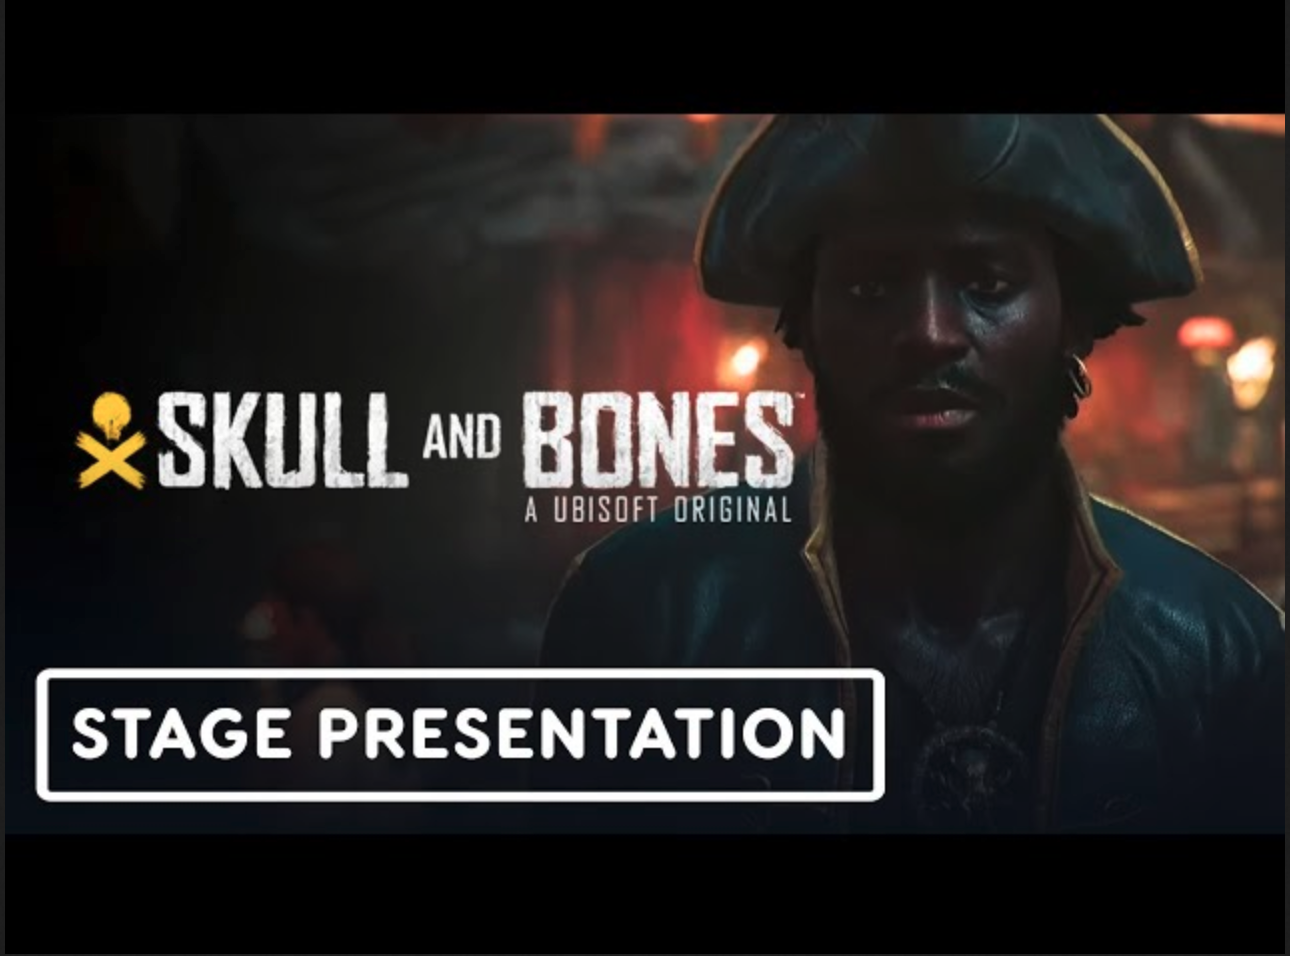 Skull and Bones Closed Beta Trailer - video Dailymotion